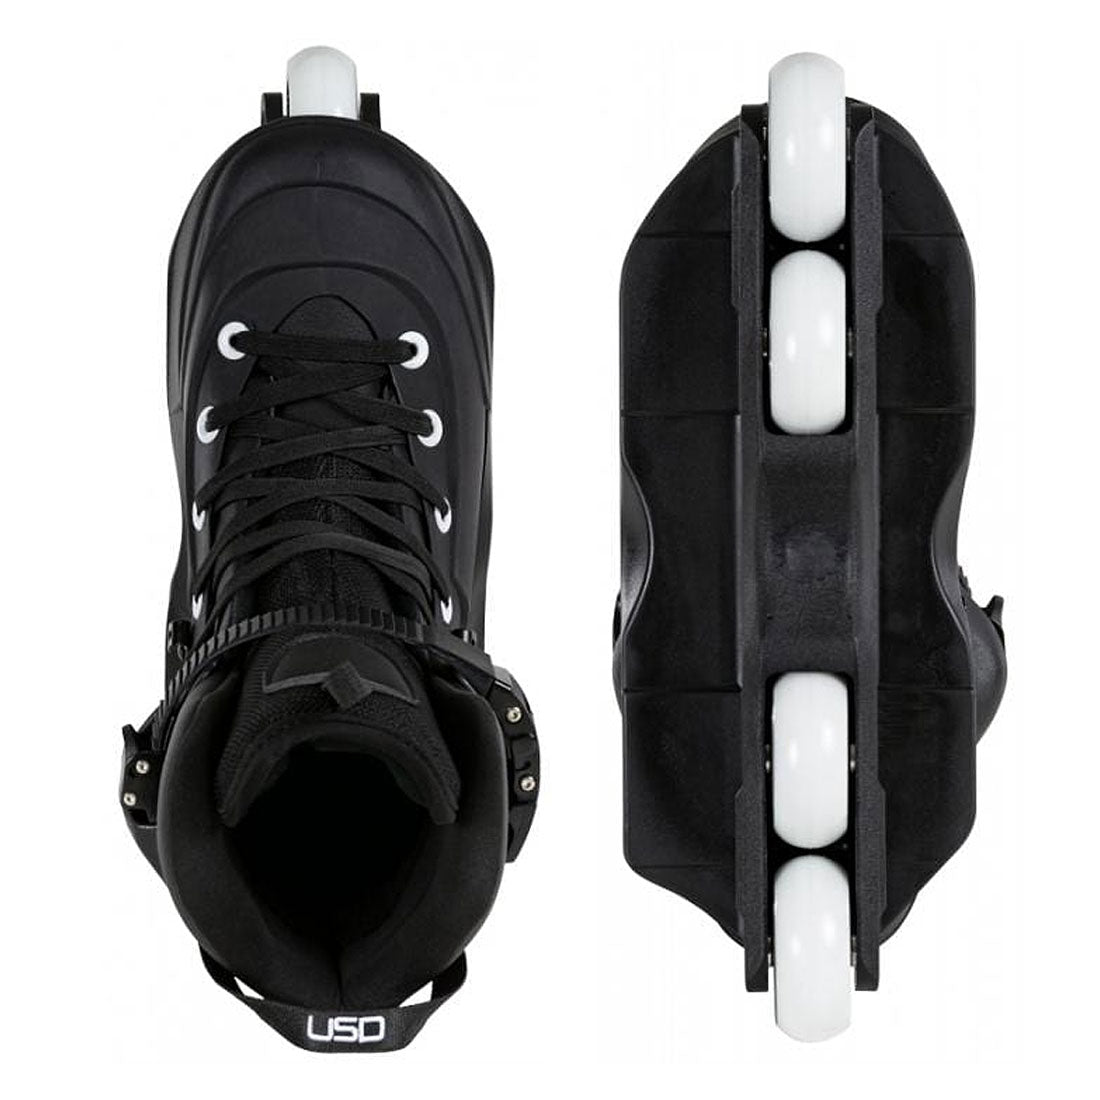 USD Aeon 60 Basic Skate - Black Inline Aggressive Skates